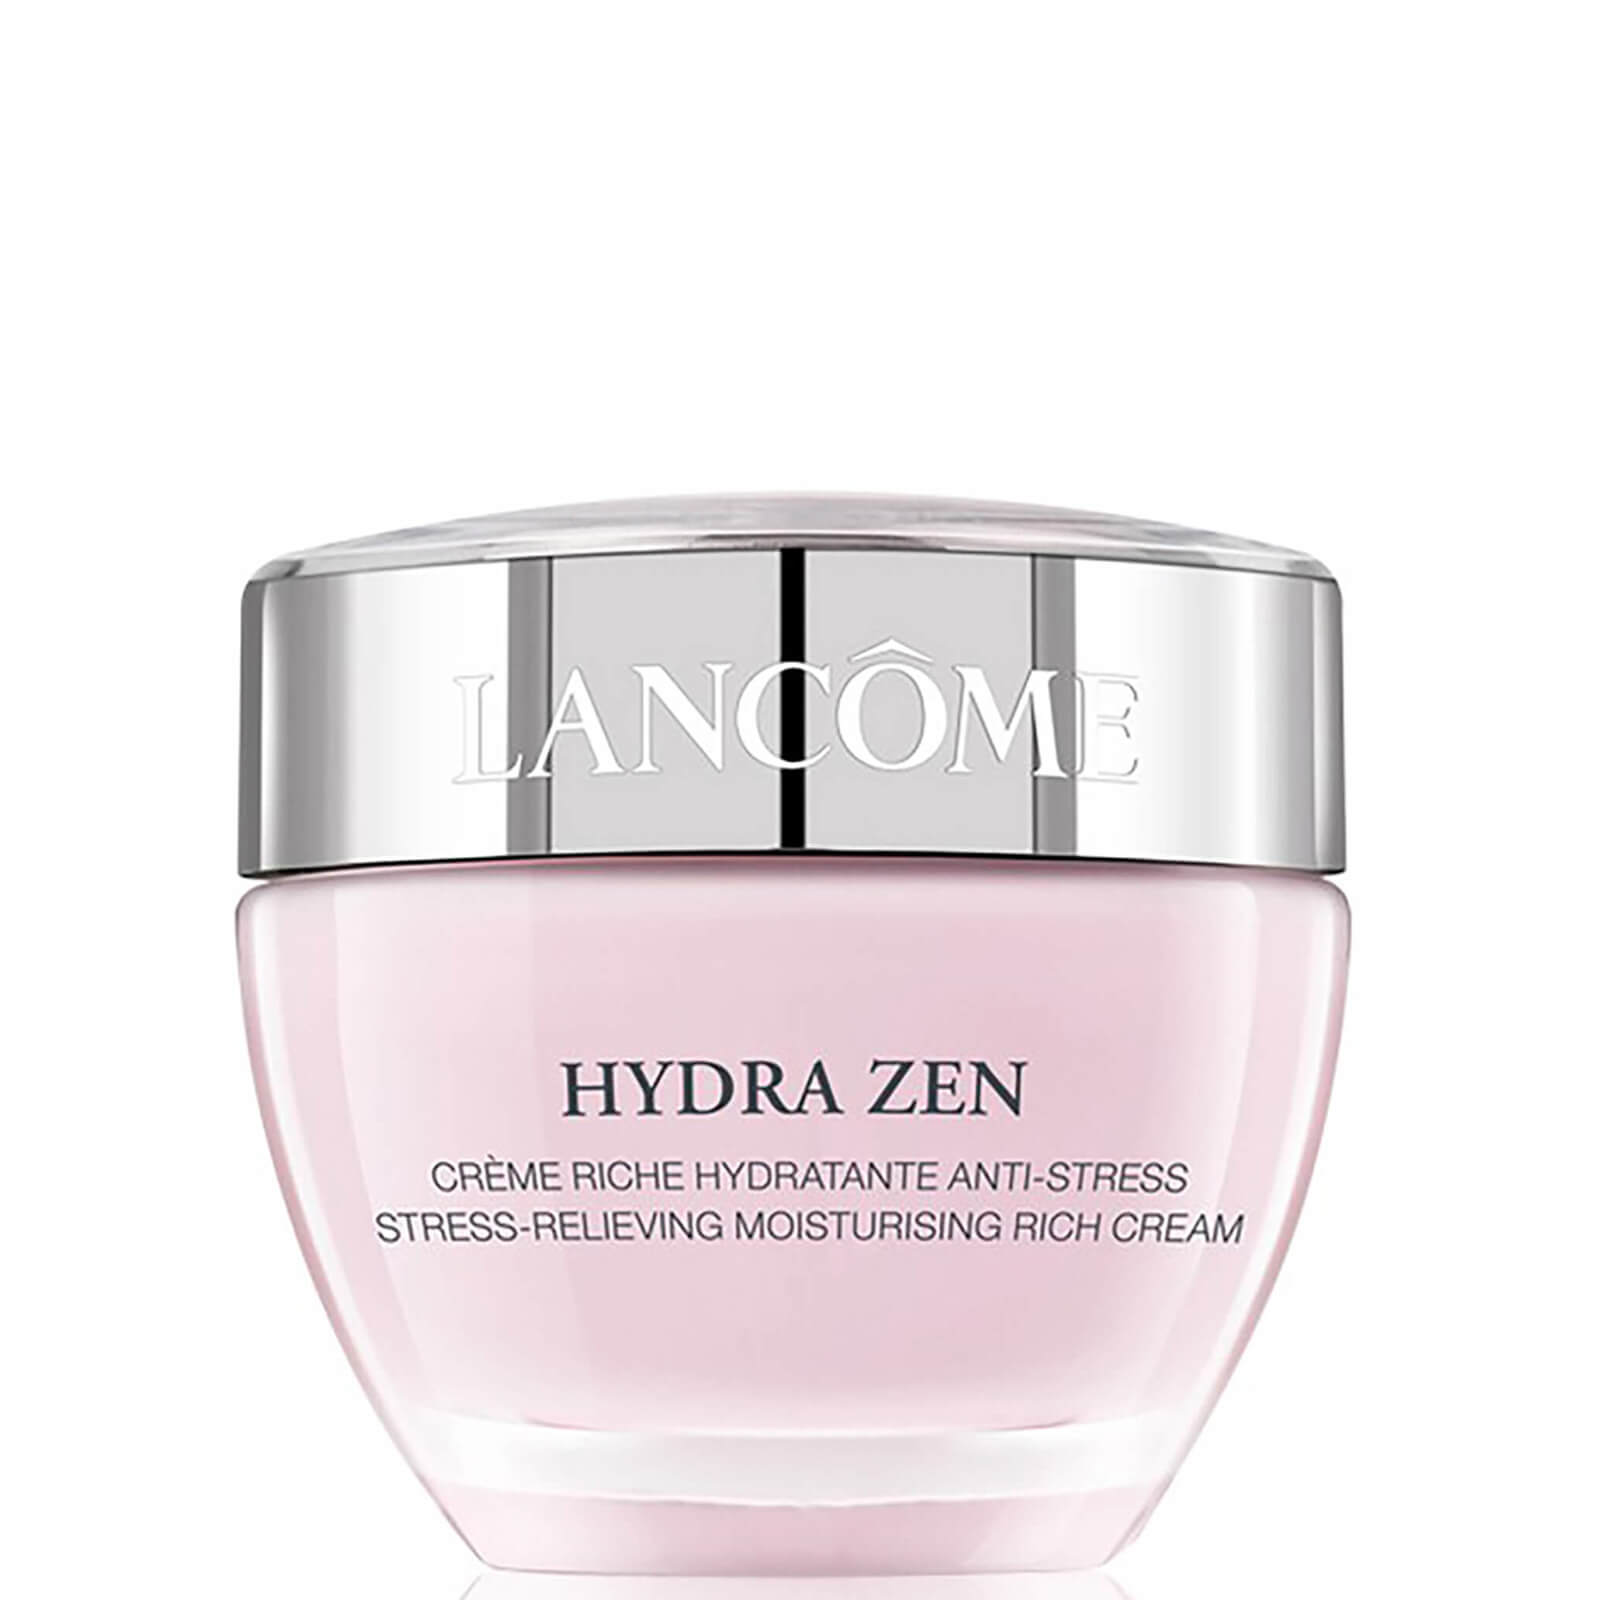 Image of Lancôme Hydra Zen crema ricca antistress 50 ml